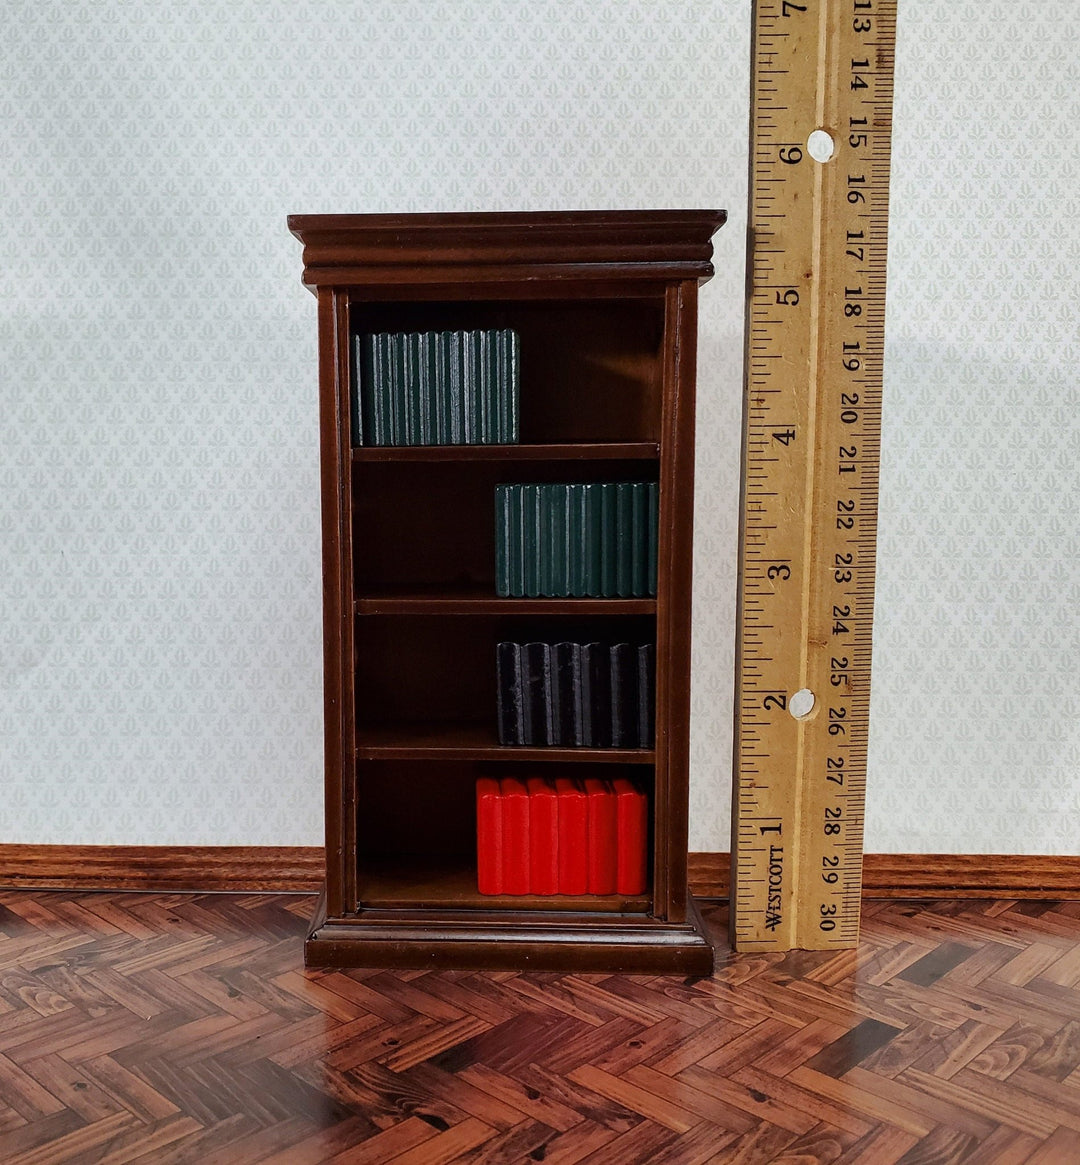 Dollhouse Bookcase 4 Shelves with Books Walnut Finish 1:12 Scale Miniature Furniture Bookshelf - Miniature Crush